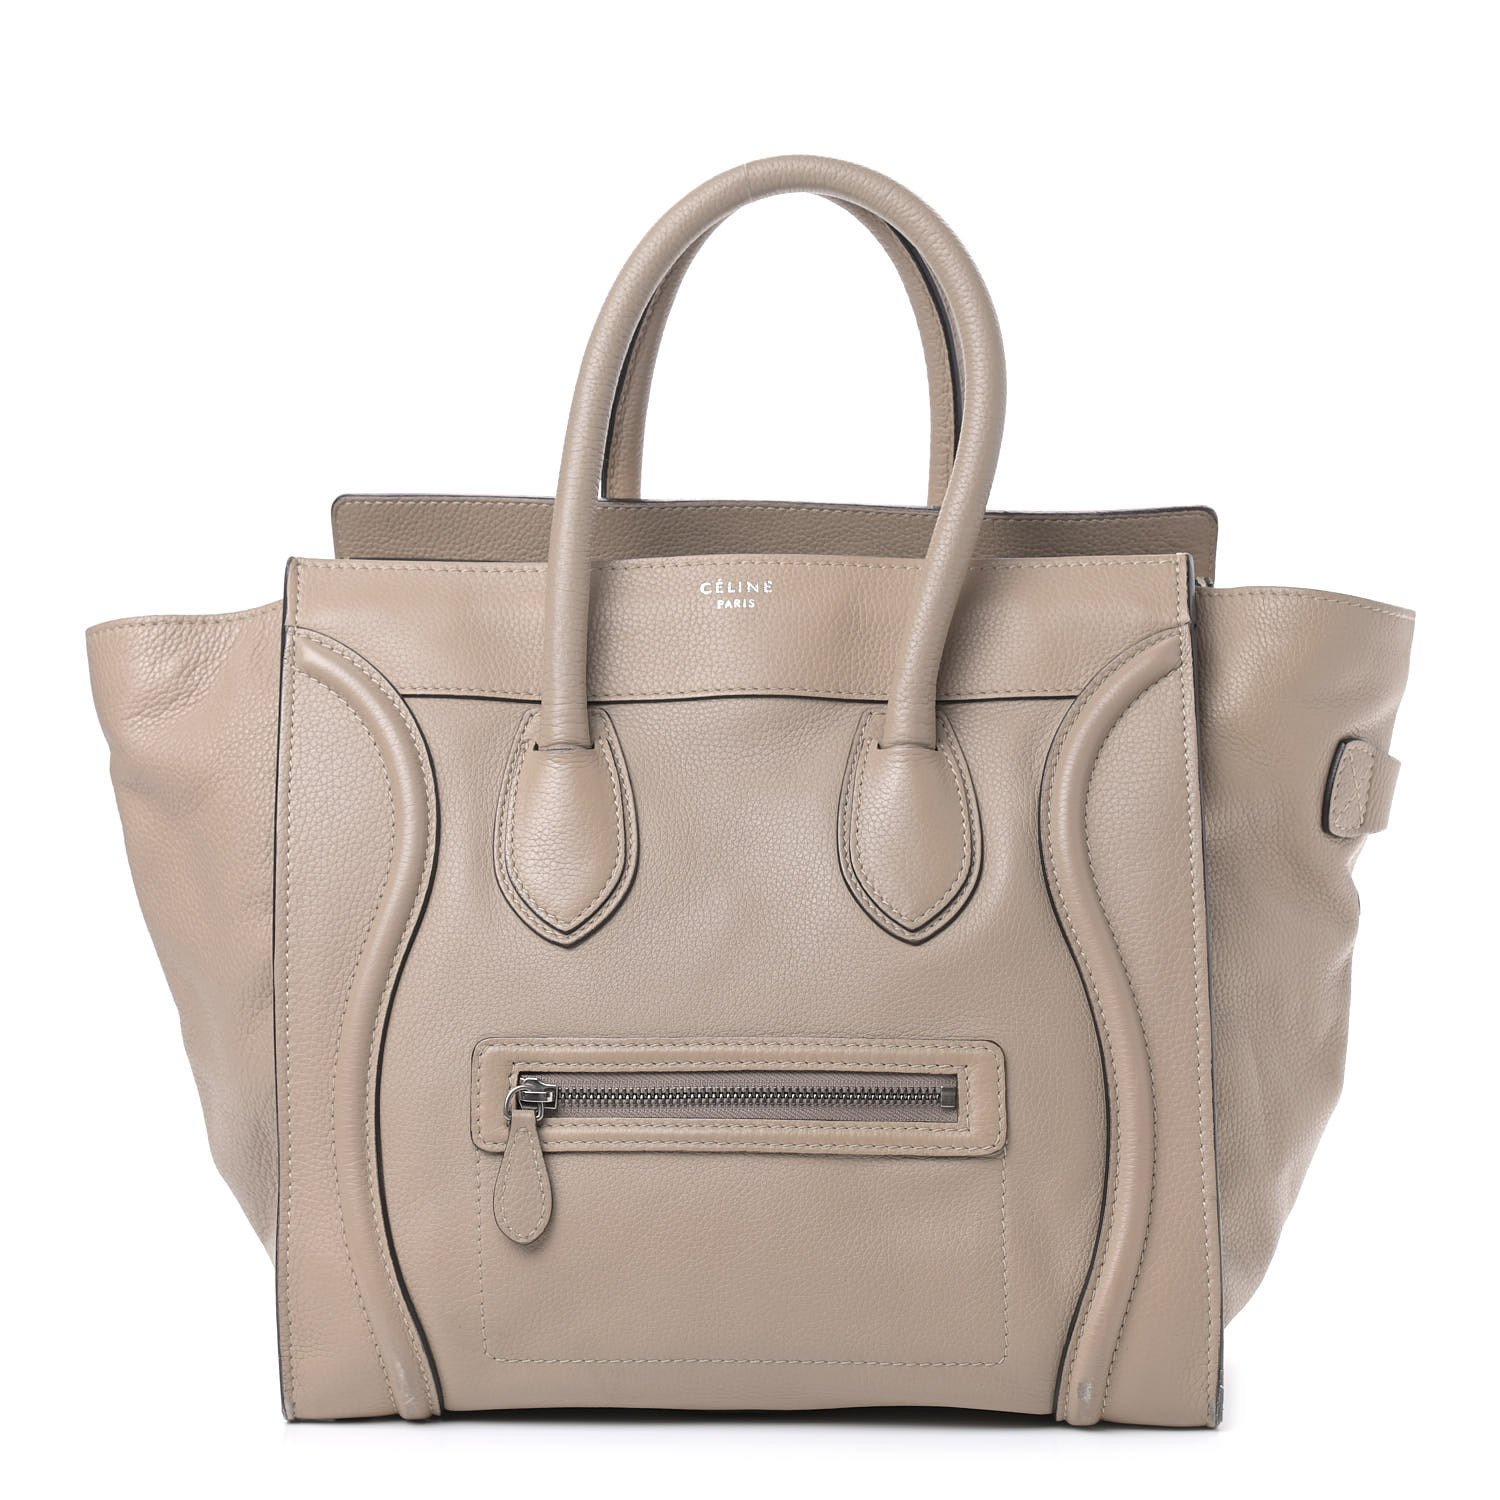 Top 10 luxury designer bags under £1000